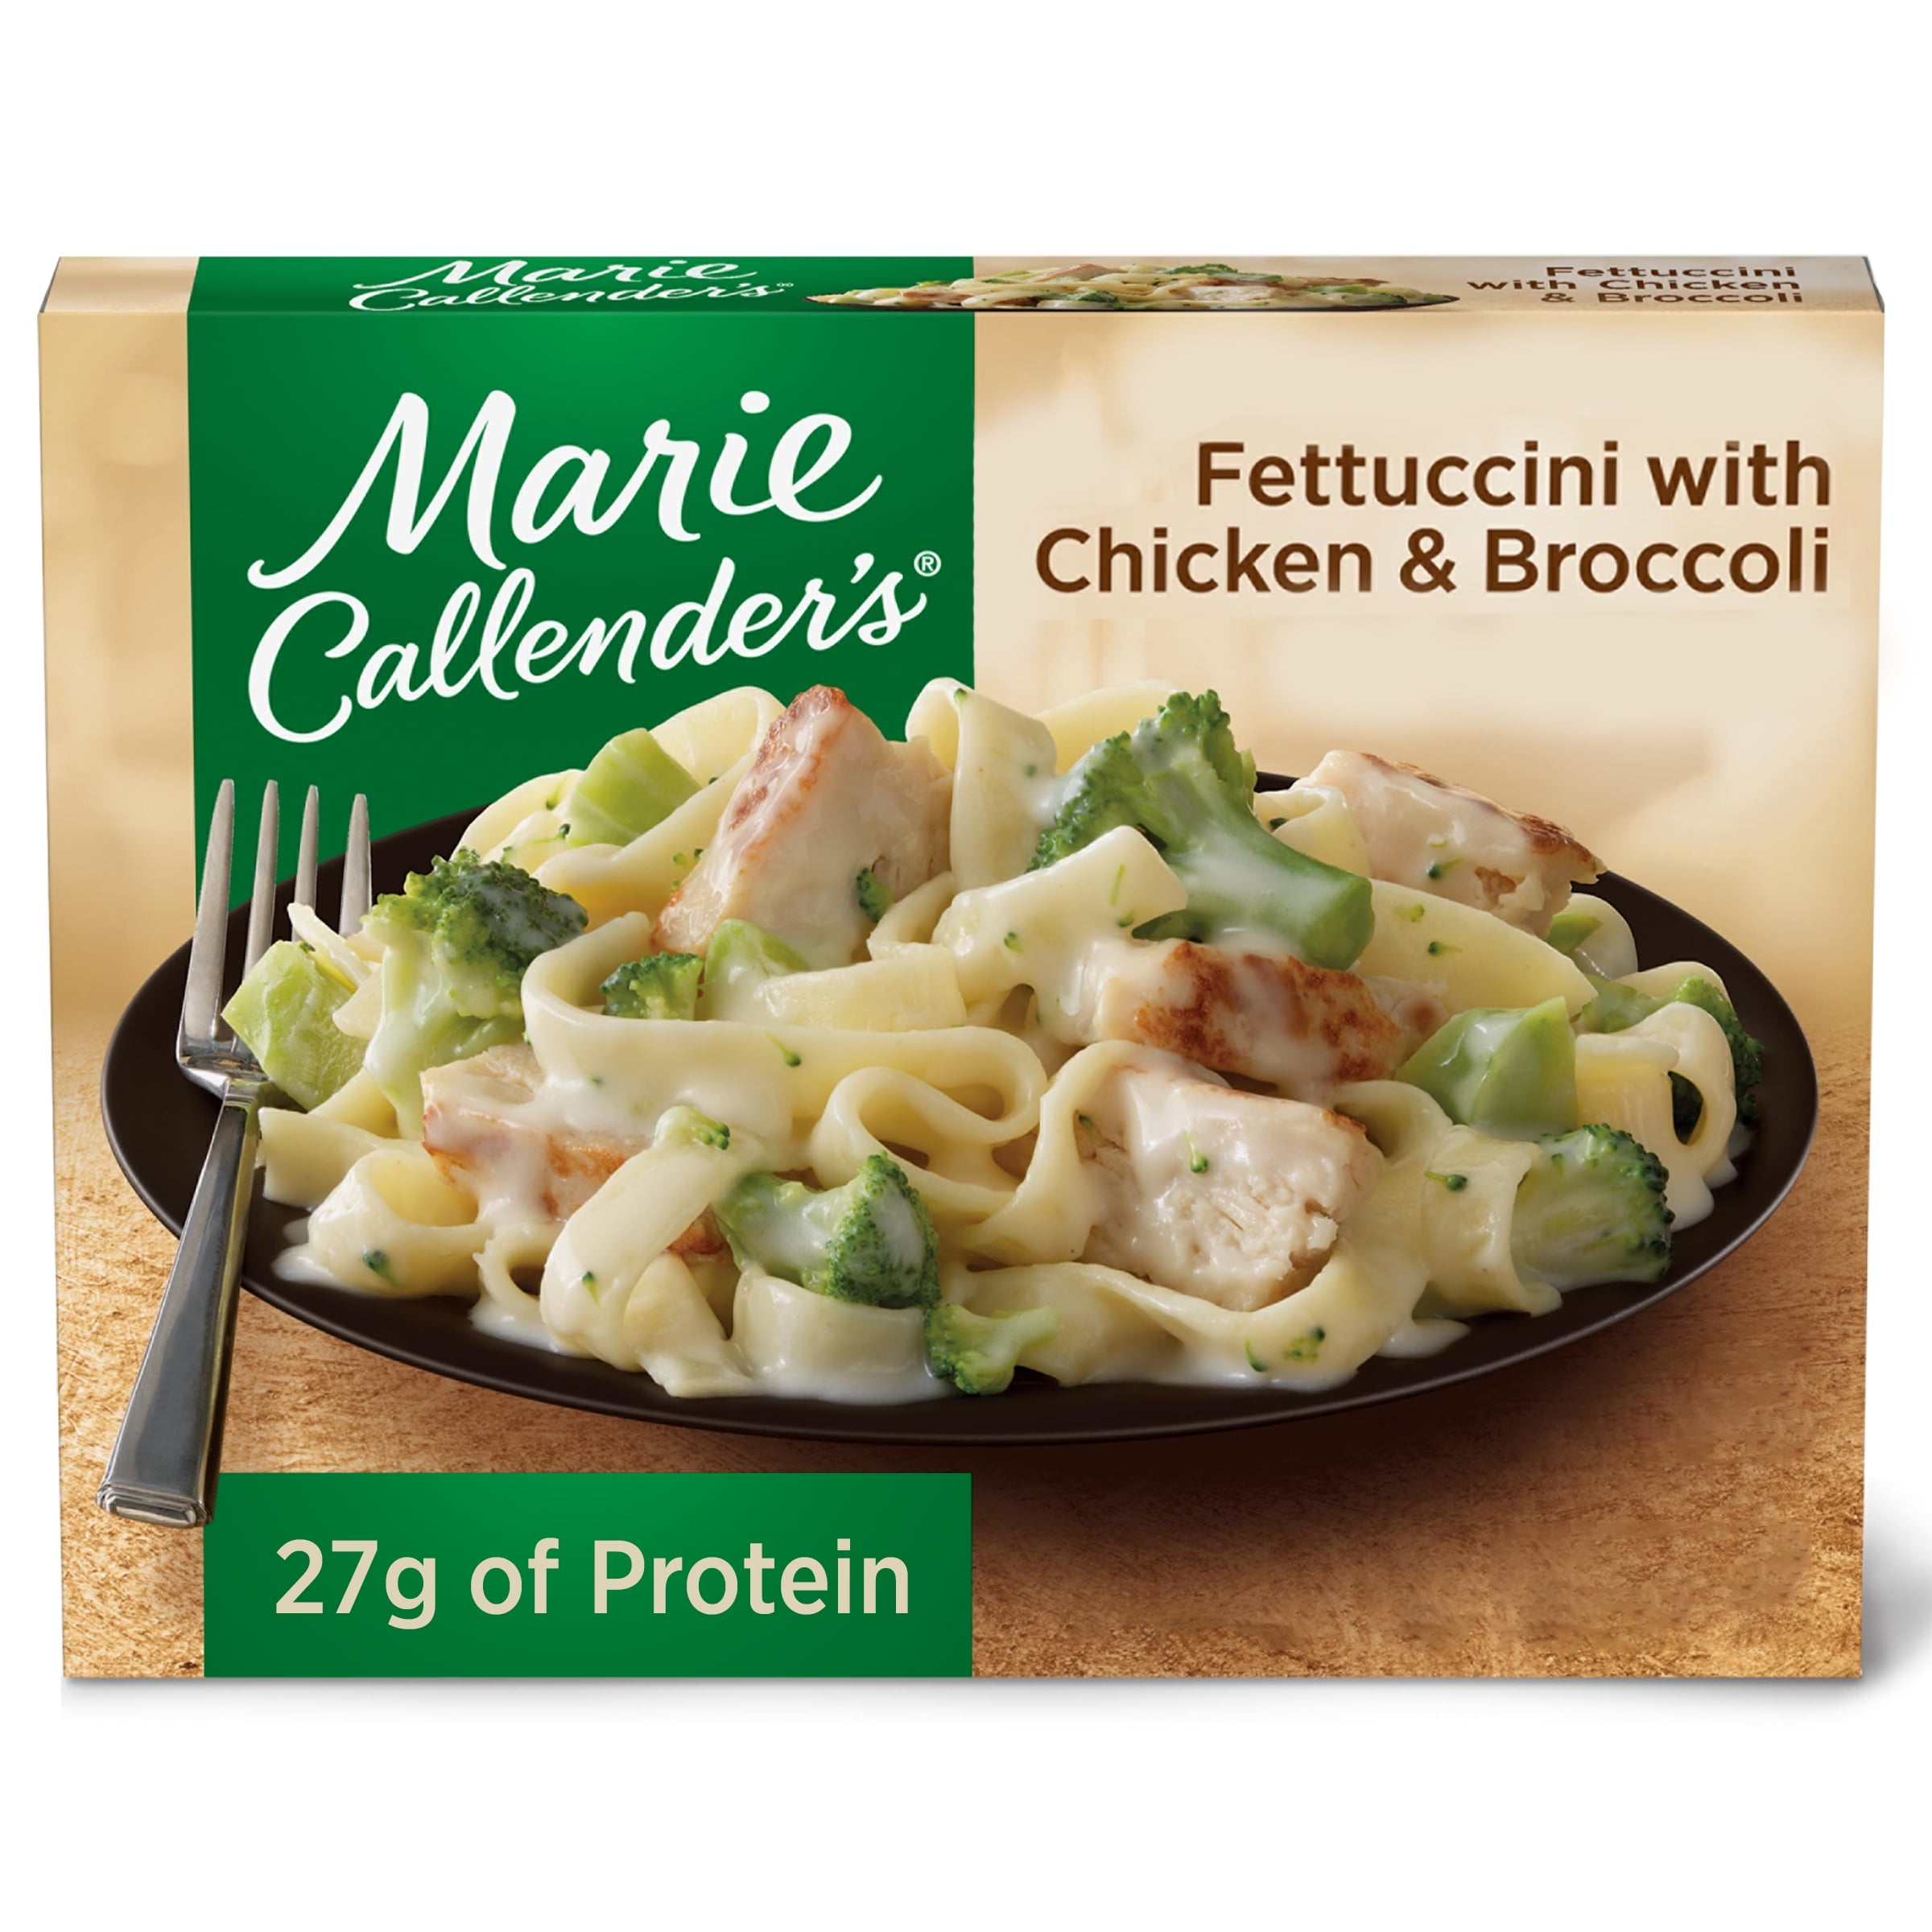 Marie Callender's Fettuccini with Chicken & Broccoli Frozen Dinner, 13 oz (Frozen)